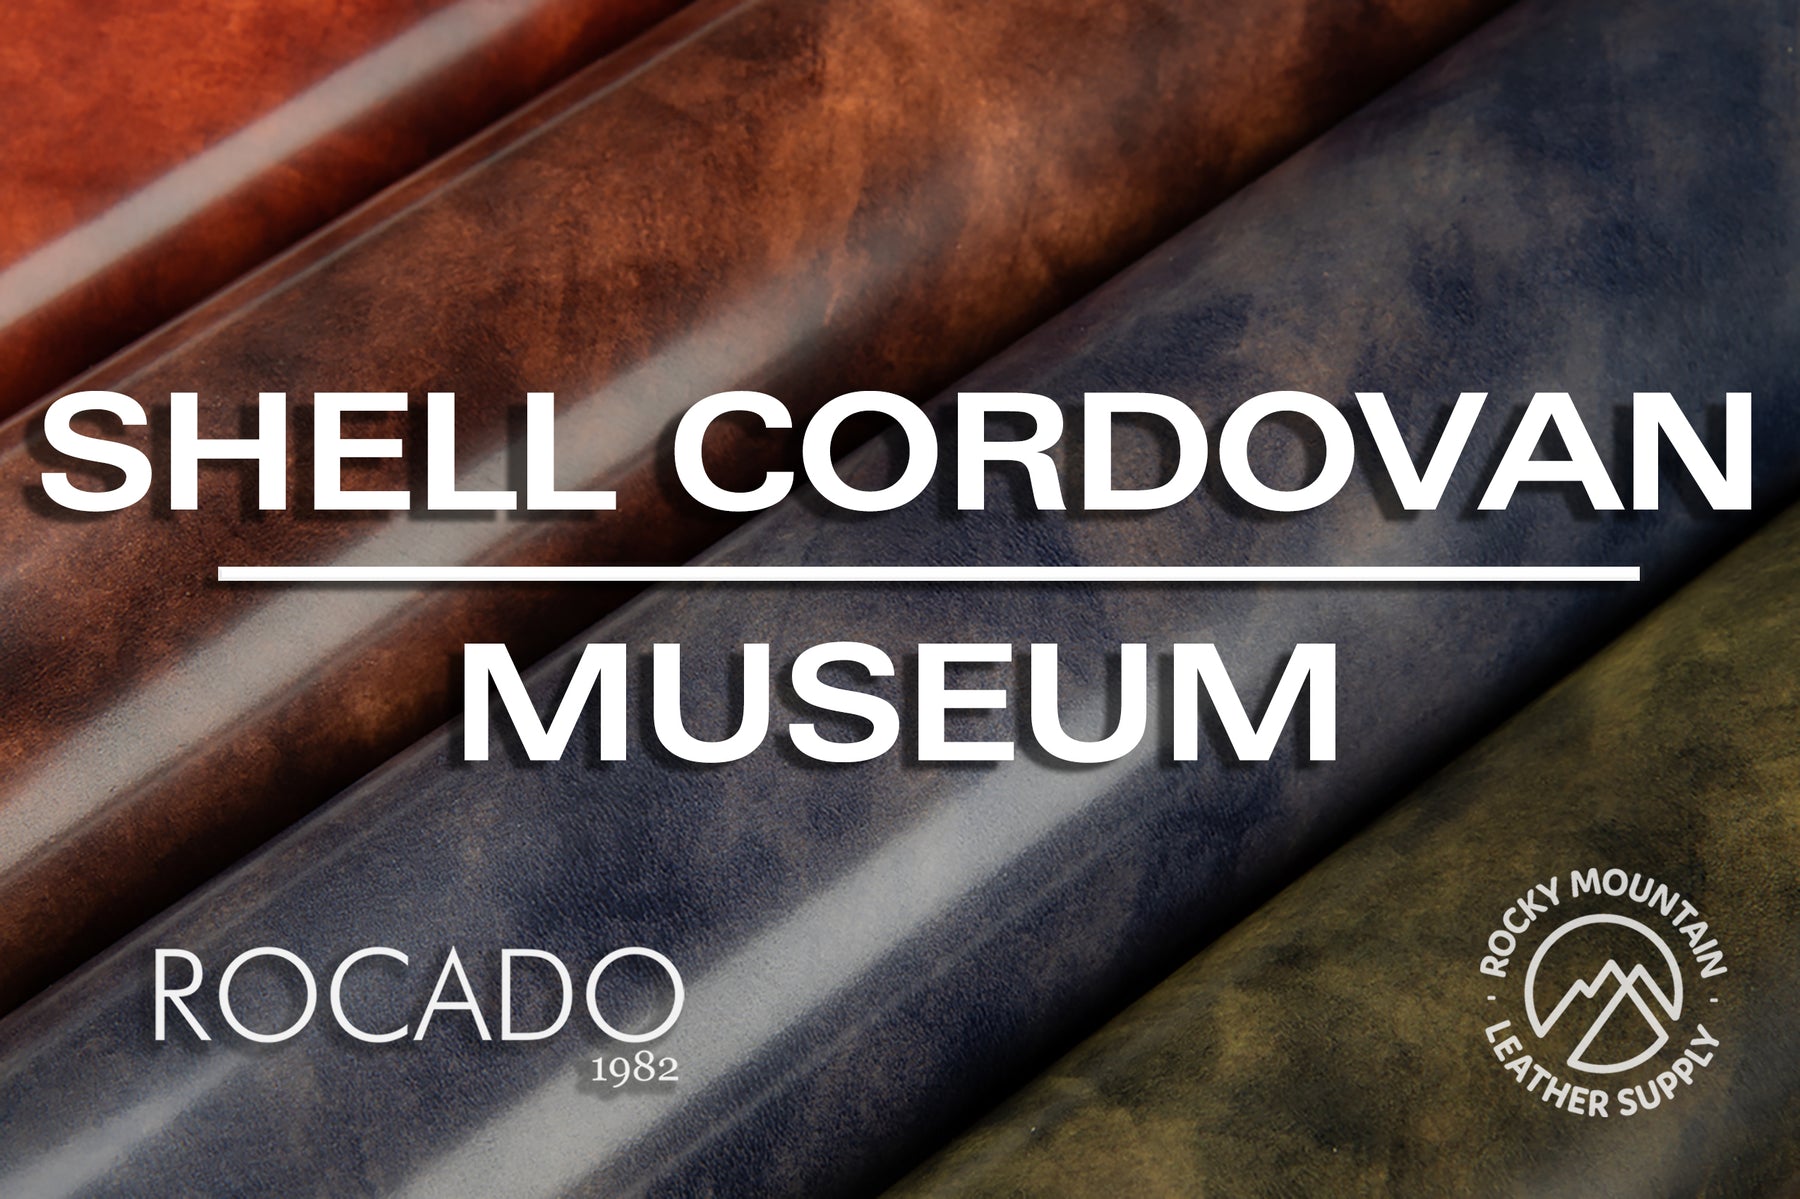 Rocado 🇮🇹 - "Museum" Shell Cordovan - Veg Tanned (Coganc)